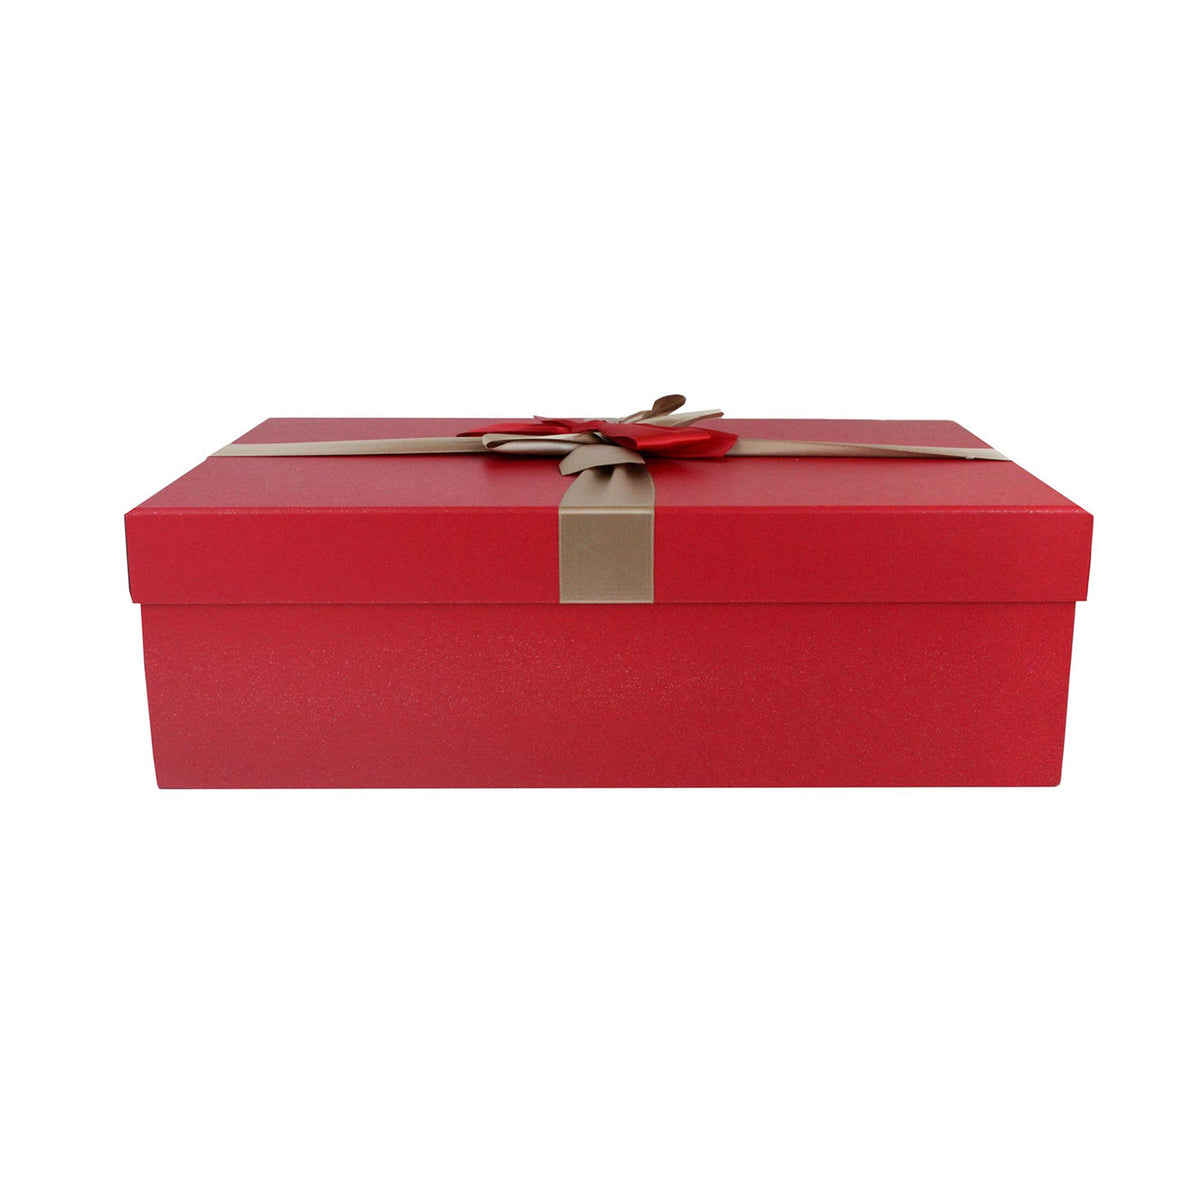 Single Red Gift Box With Cream Satin Ribbon